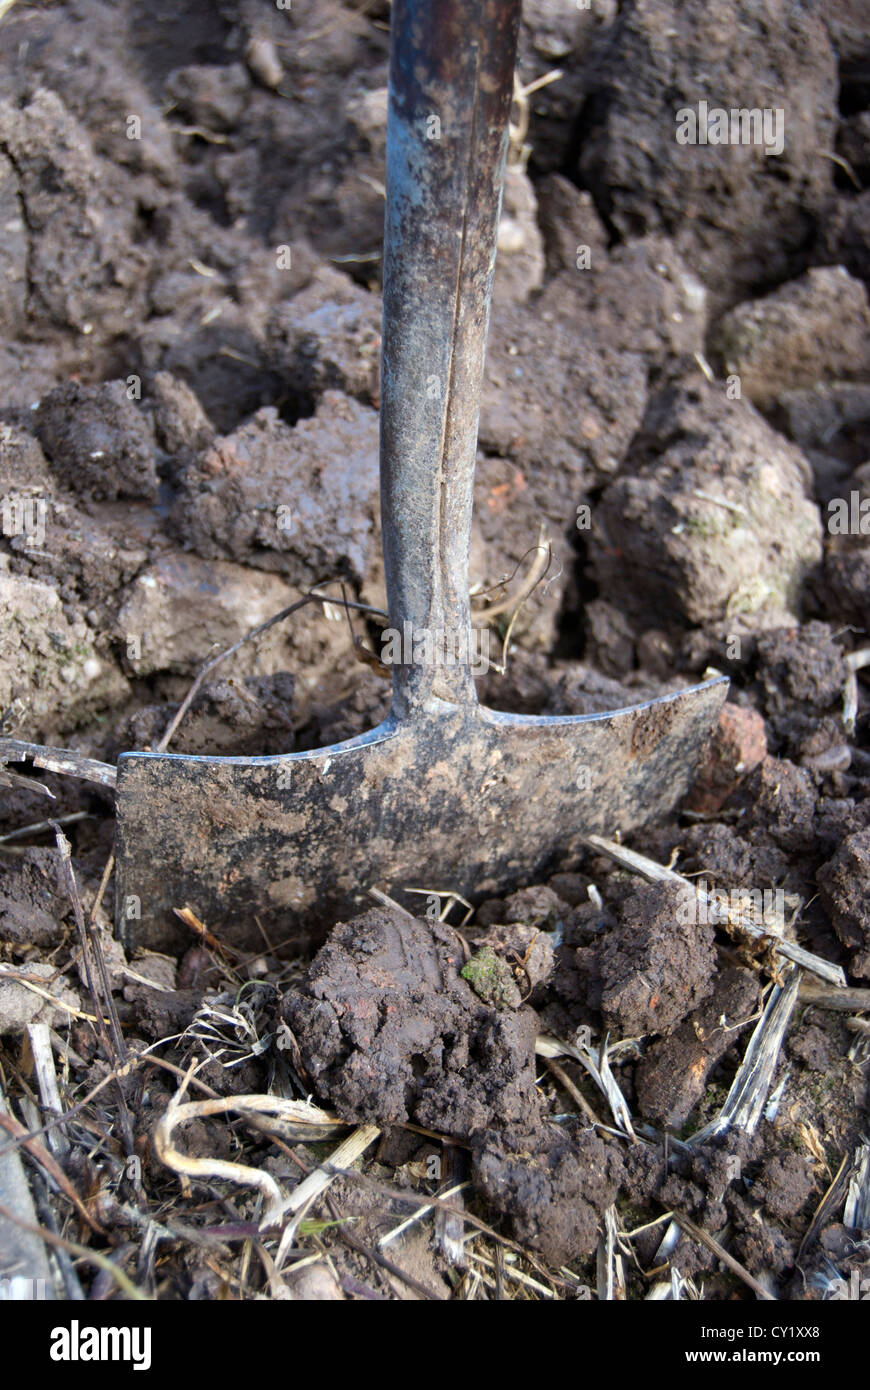 Spade dug into soil on allotment Stock Photo